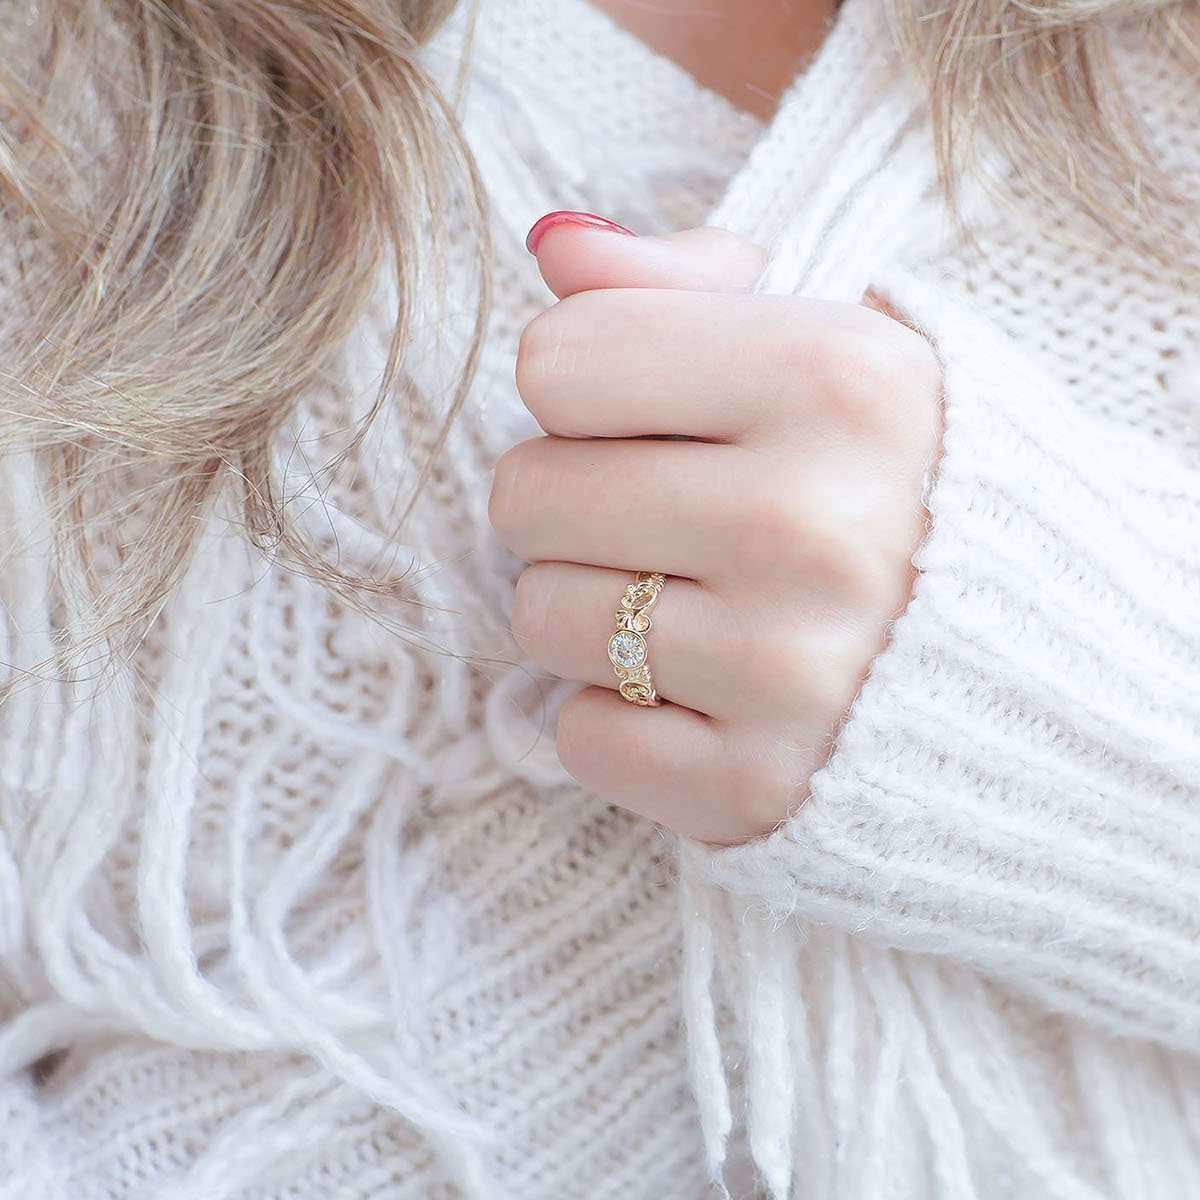 Filigree Diamond Engagement Ring - Size 7.5-Alysha Whitfield